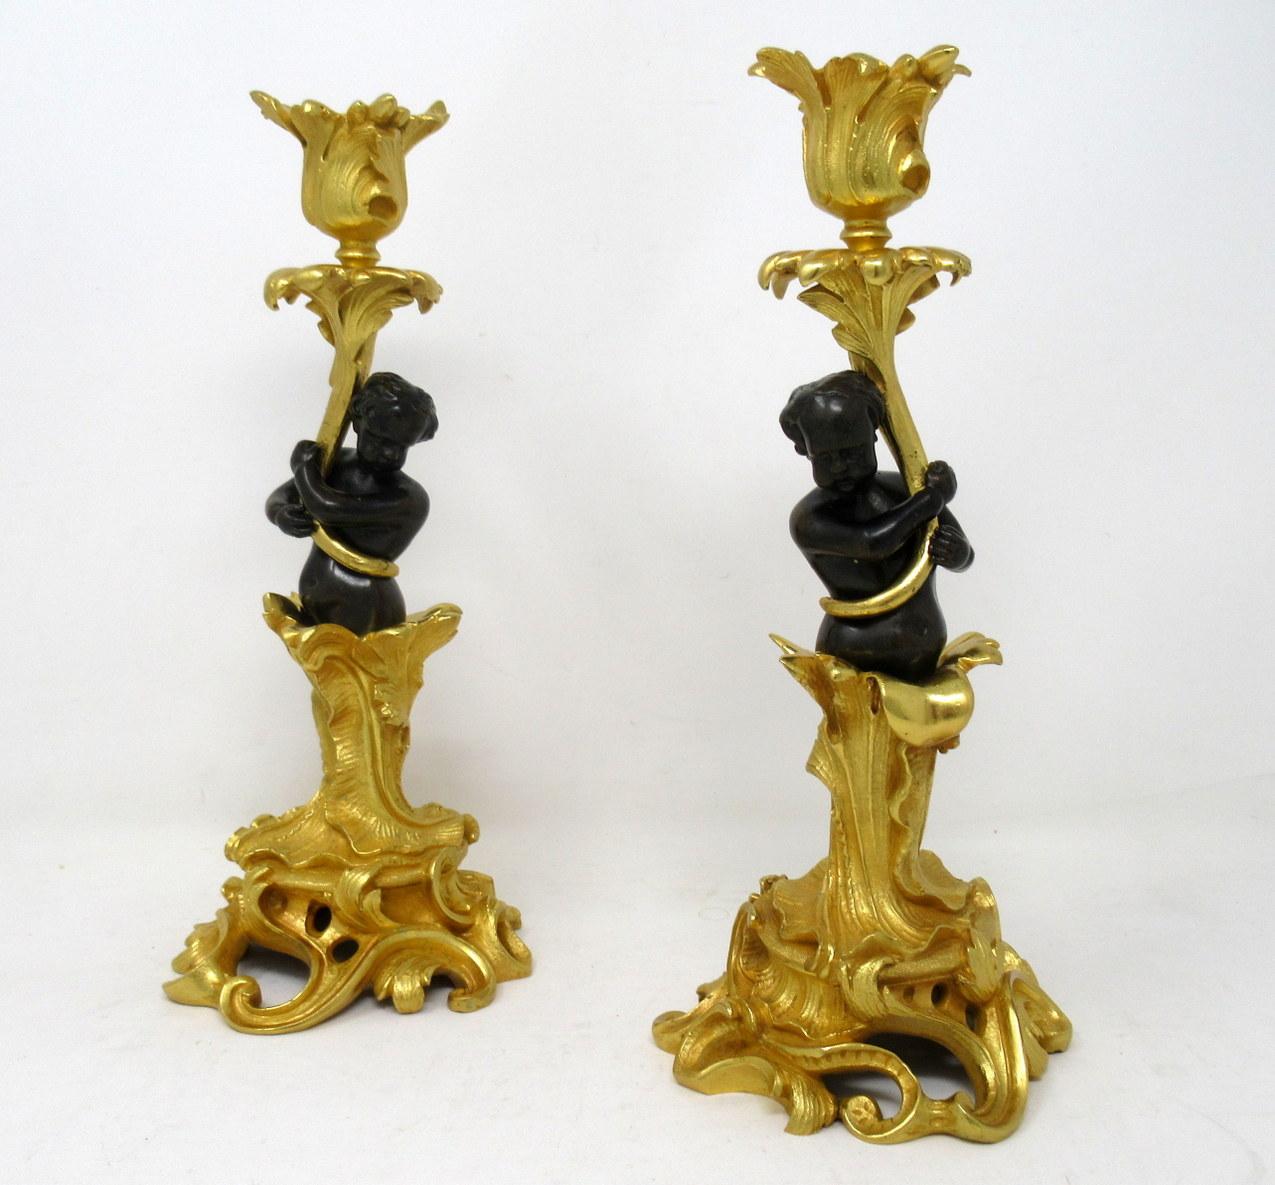 Antique Vintage Pair of French Ormolu Gilt Bronze Candelabra Candlesticks 1